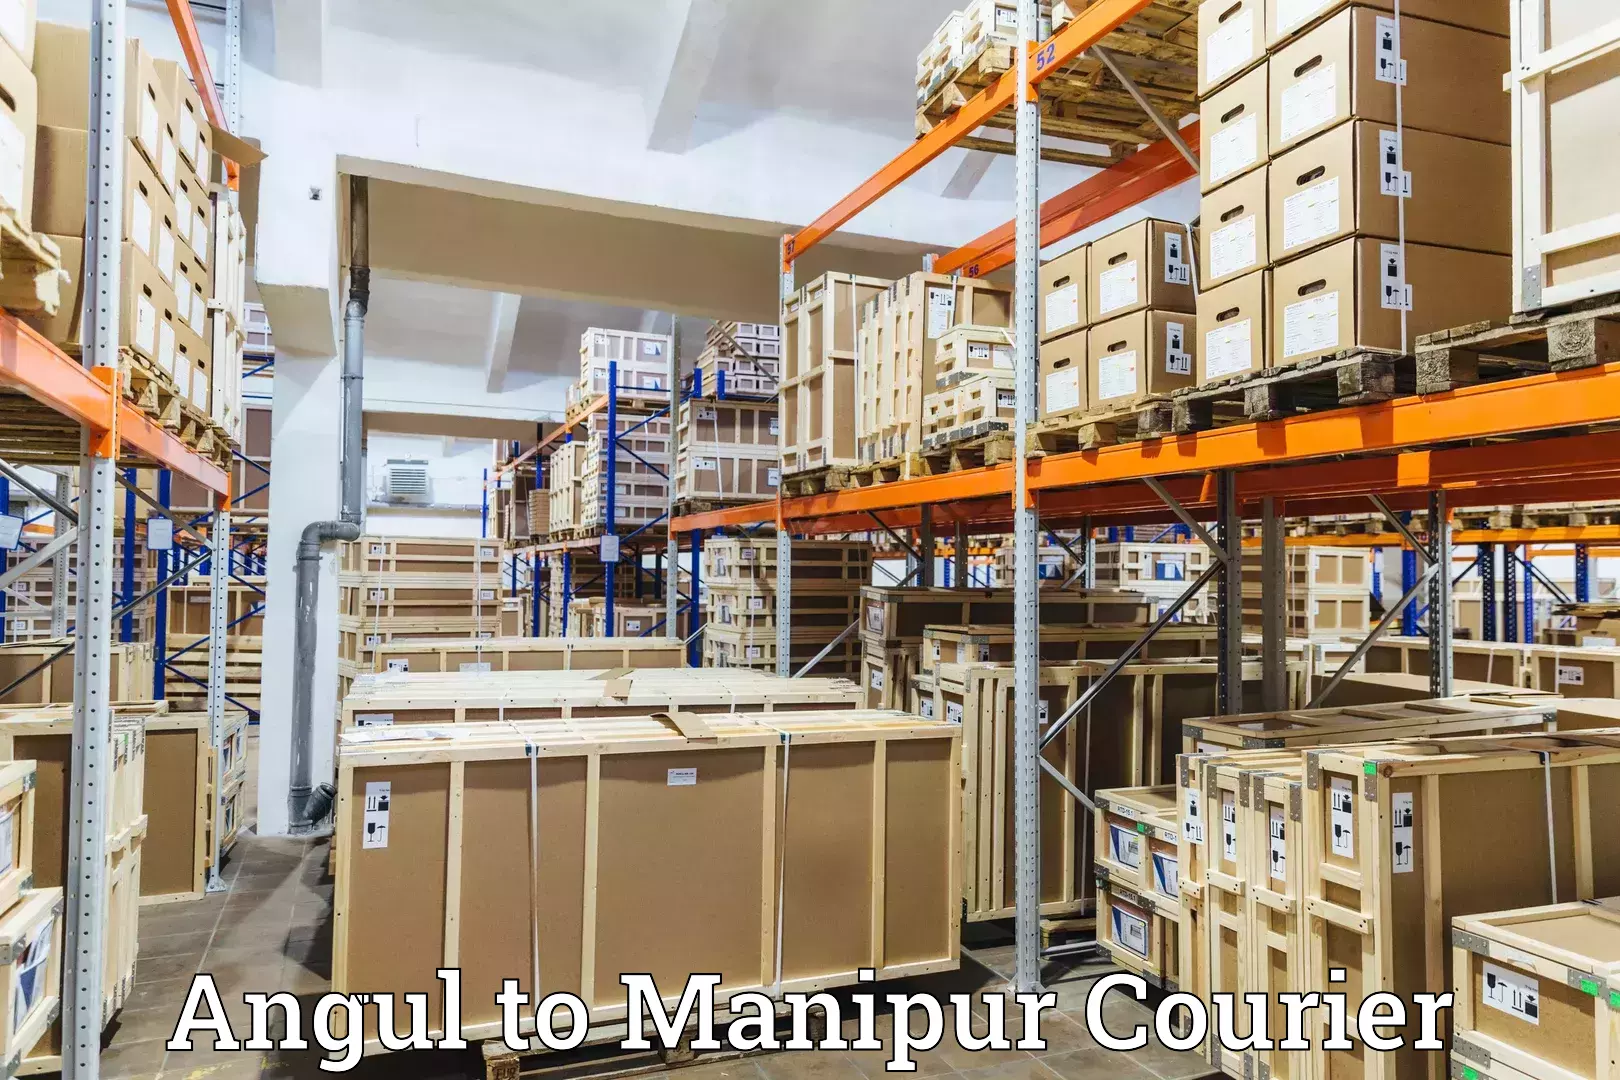 Courier service comparison Angul to Manipur